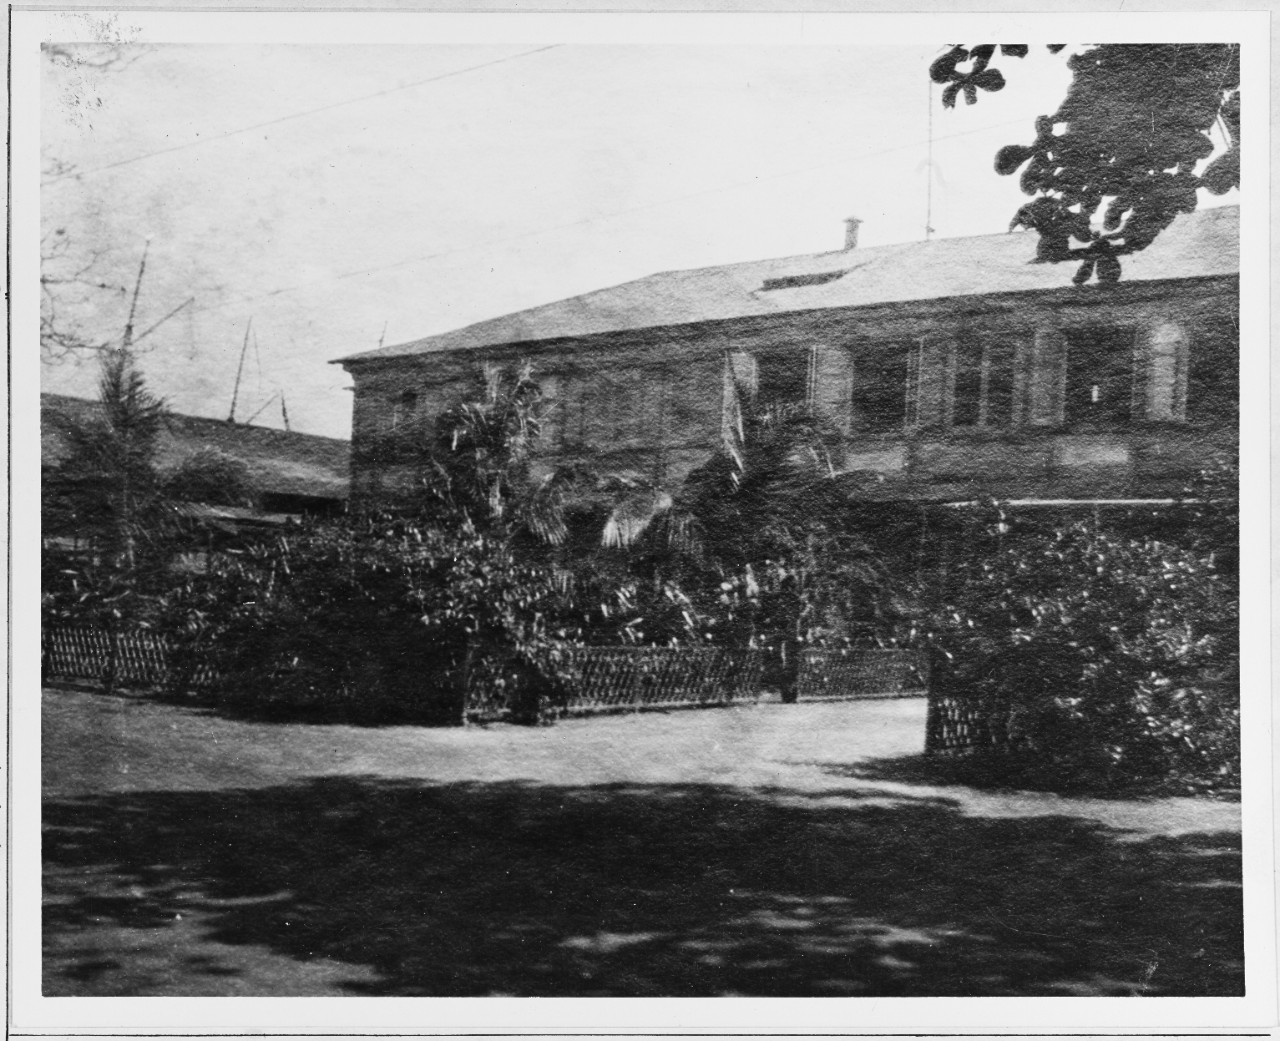 Commandant's house, Naval Base Cavite, Philippine Islands, 1900.